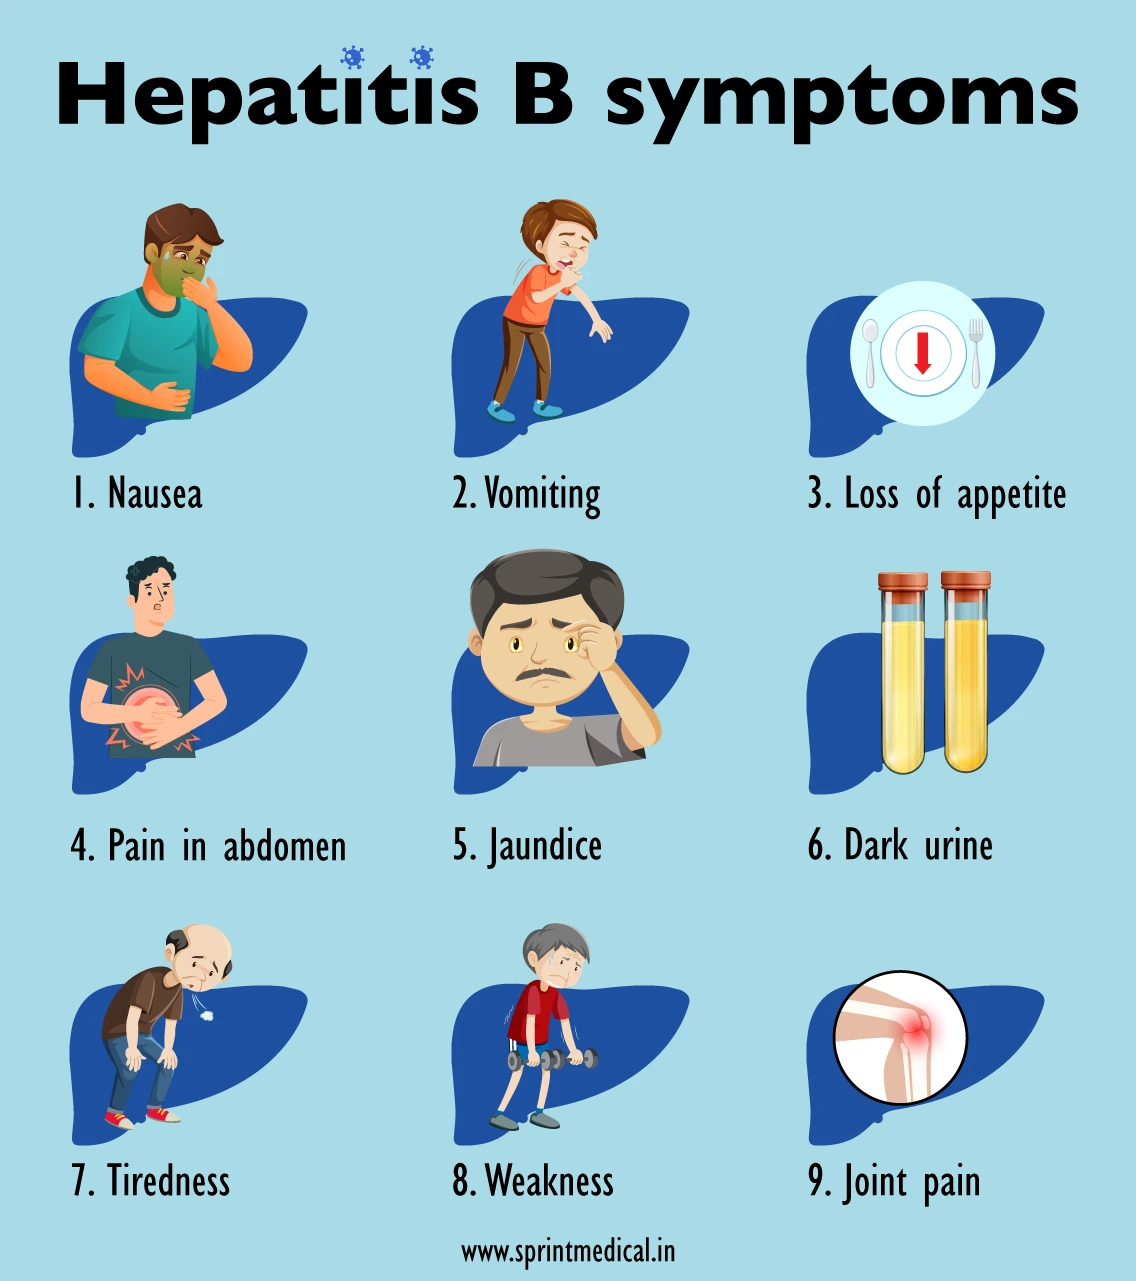 hepatitis a virus symptoms